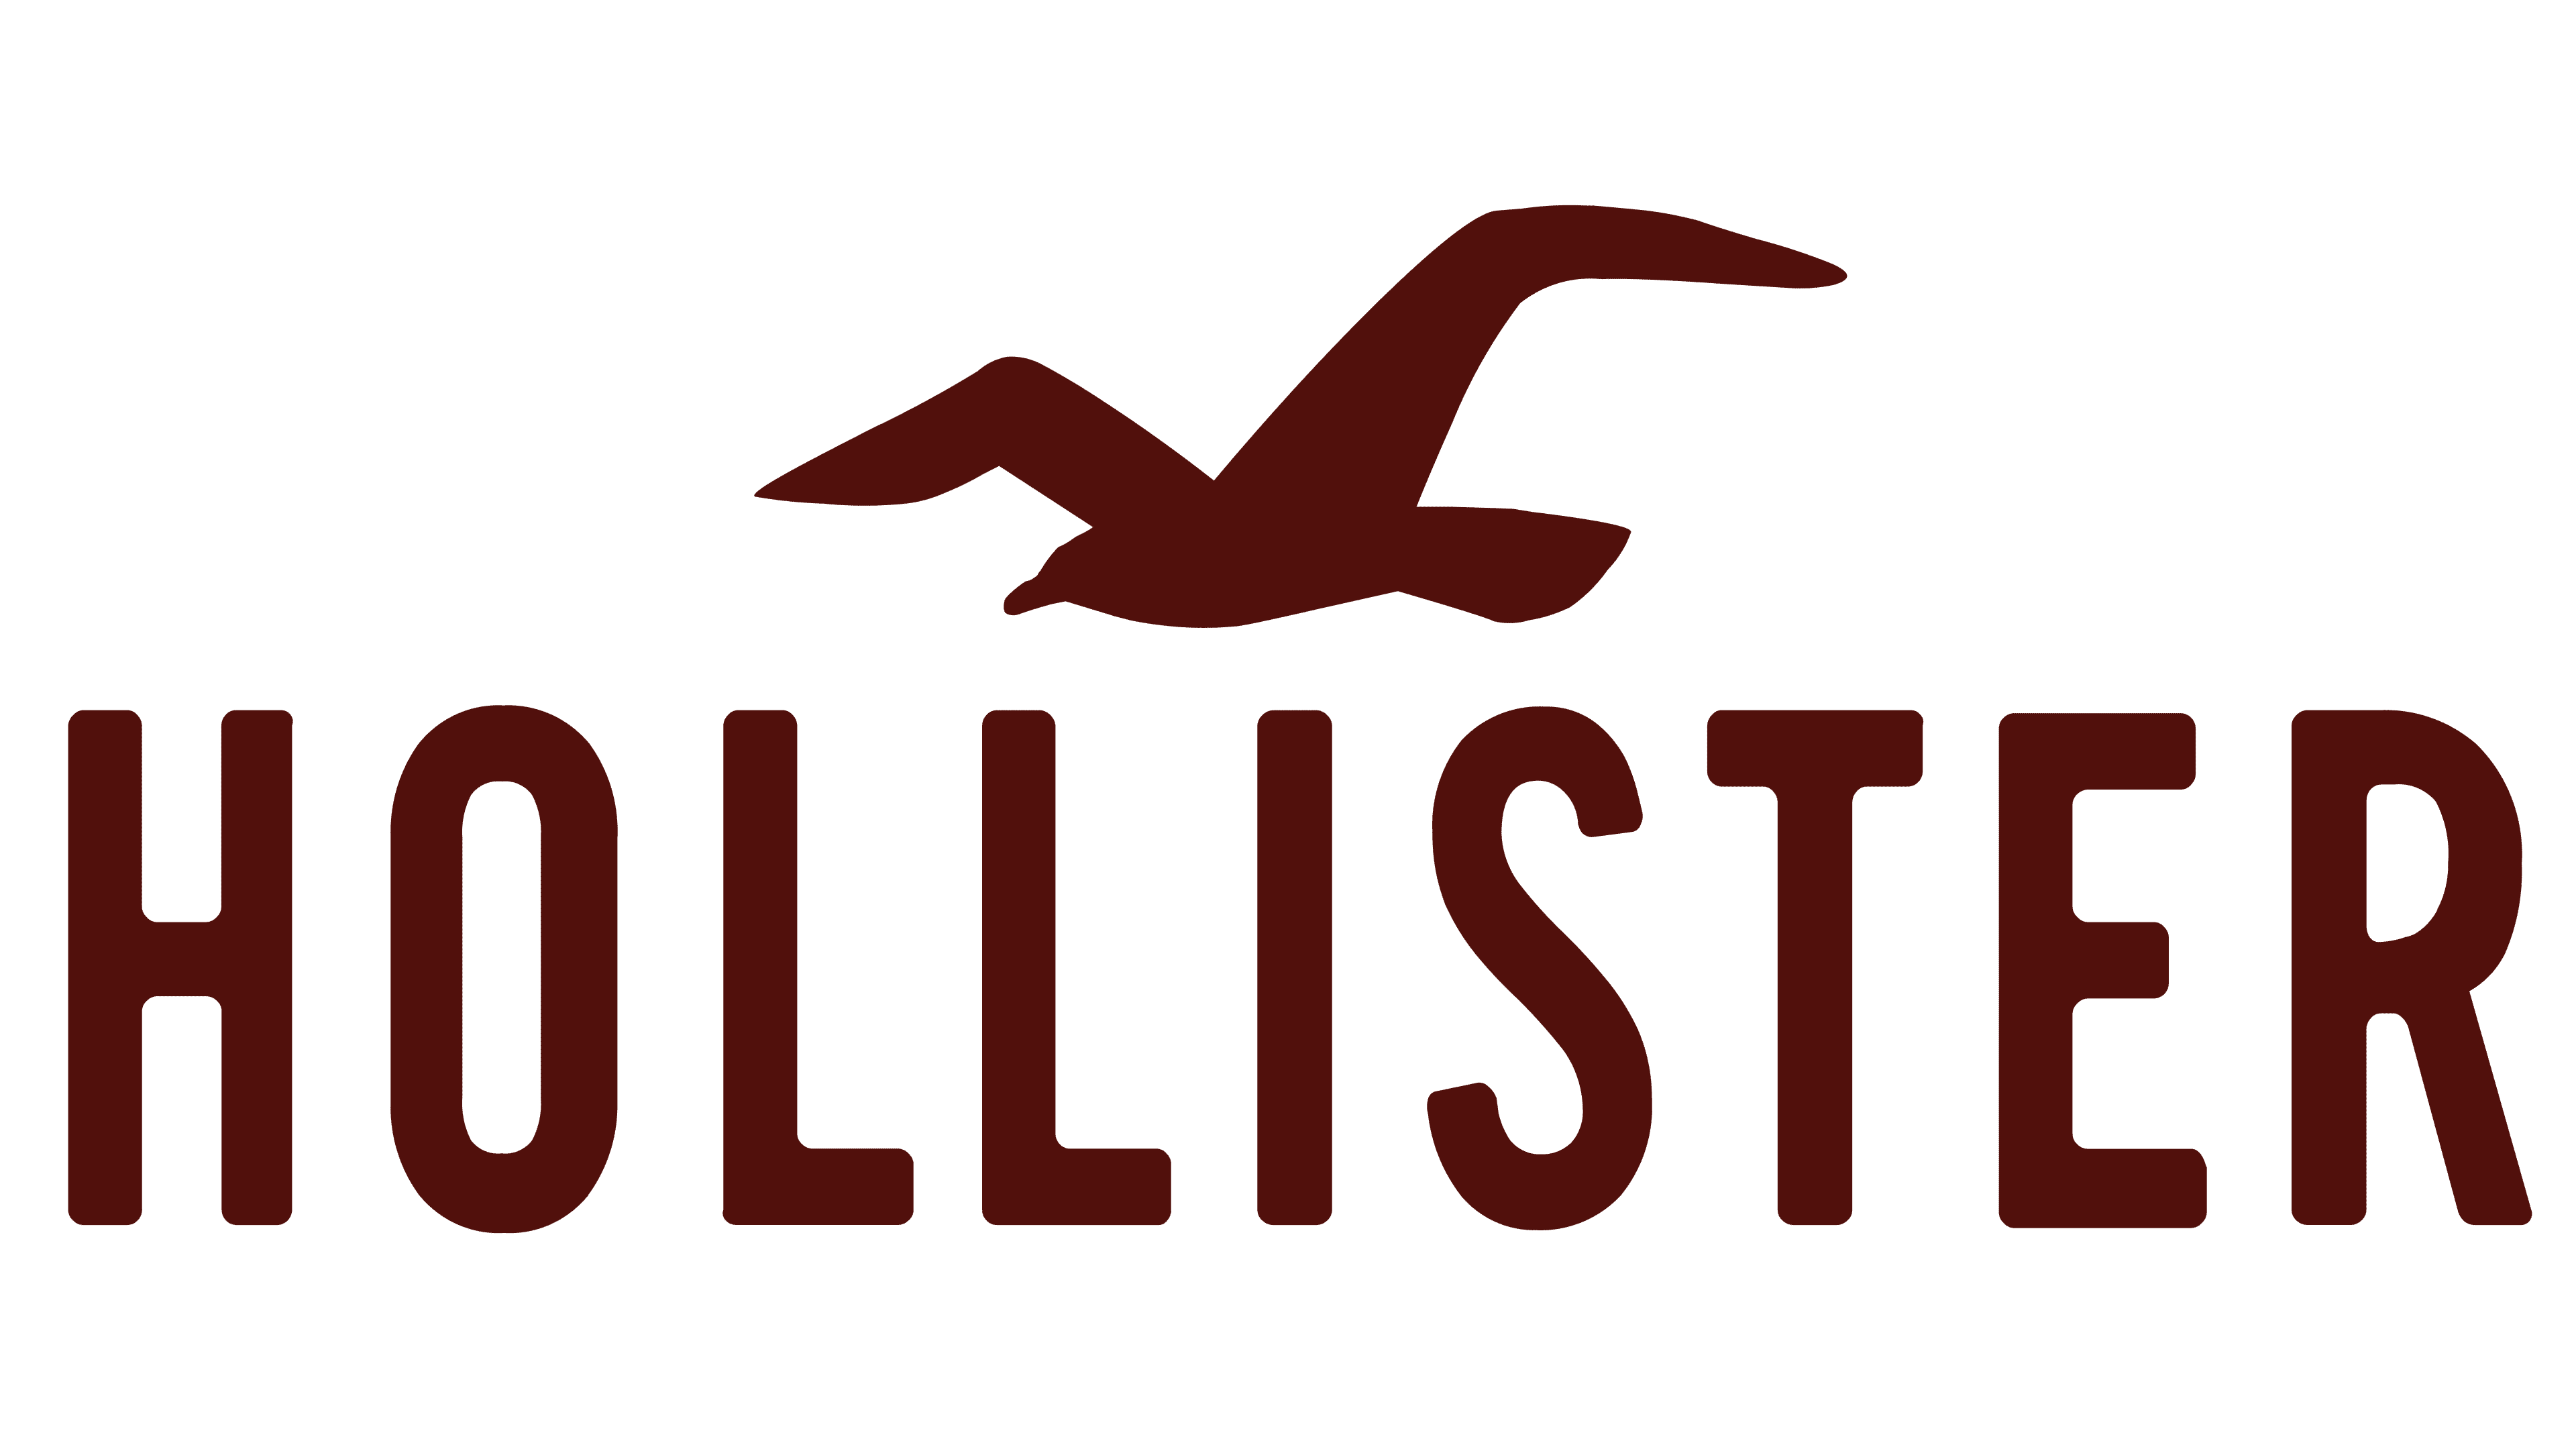 hollister shirts logo